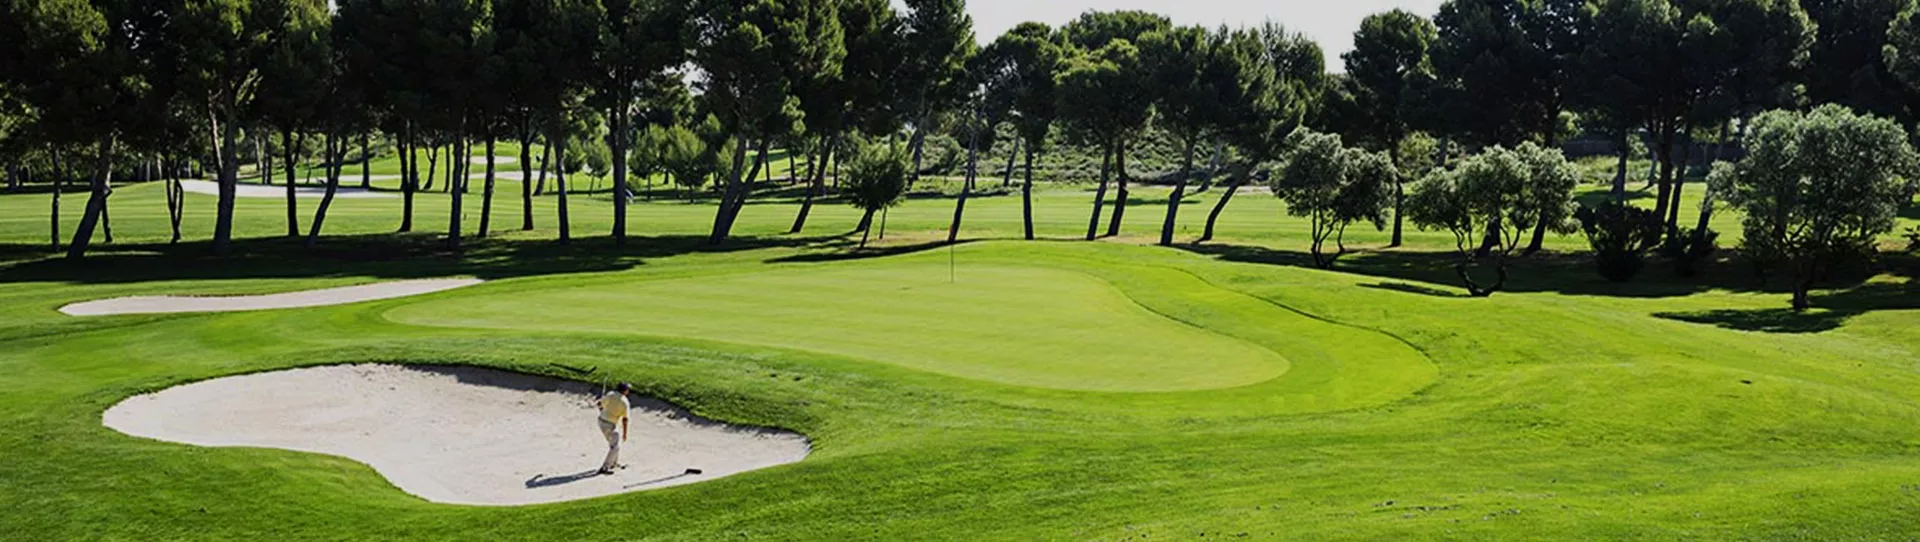 Spain golf courses - La Peñaza Golf Course - Photo 2